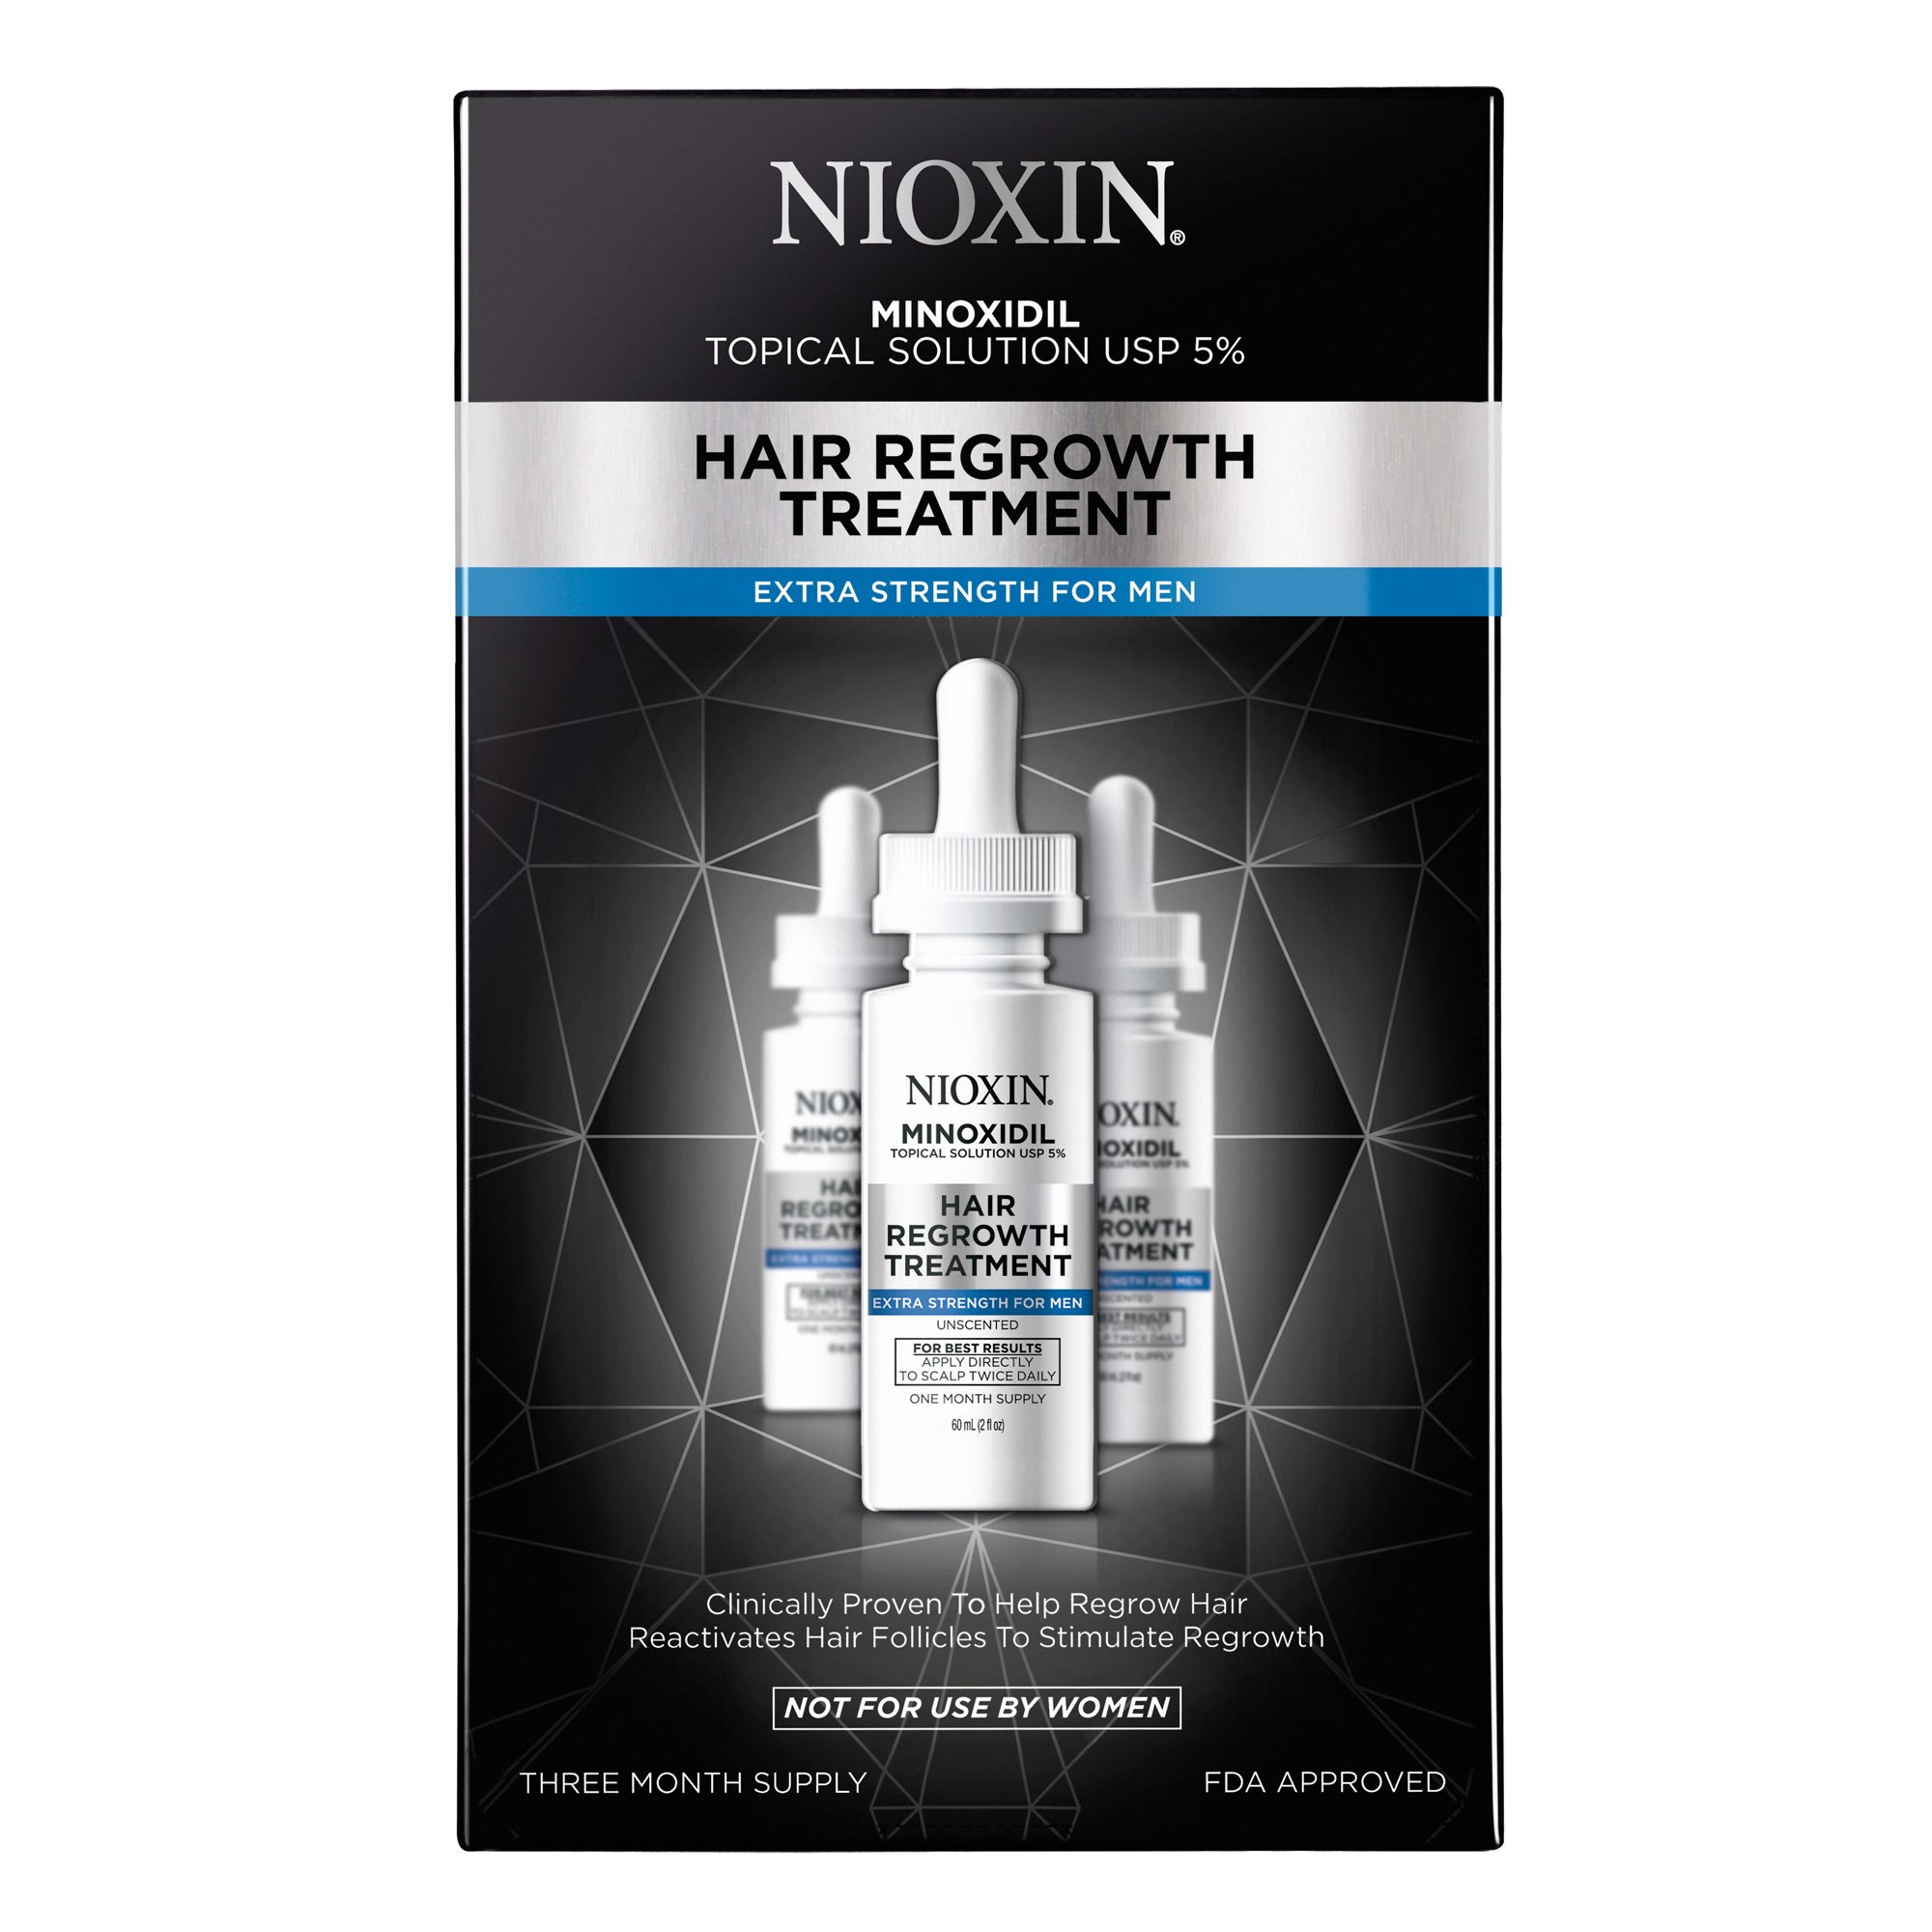 Nioxin Hair Regrowth Treatment for Men 5% - 30 Day 2oz